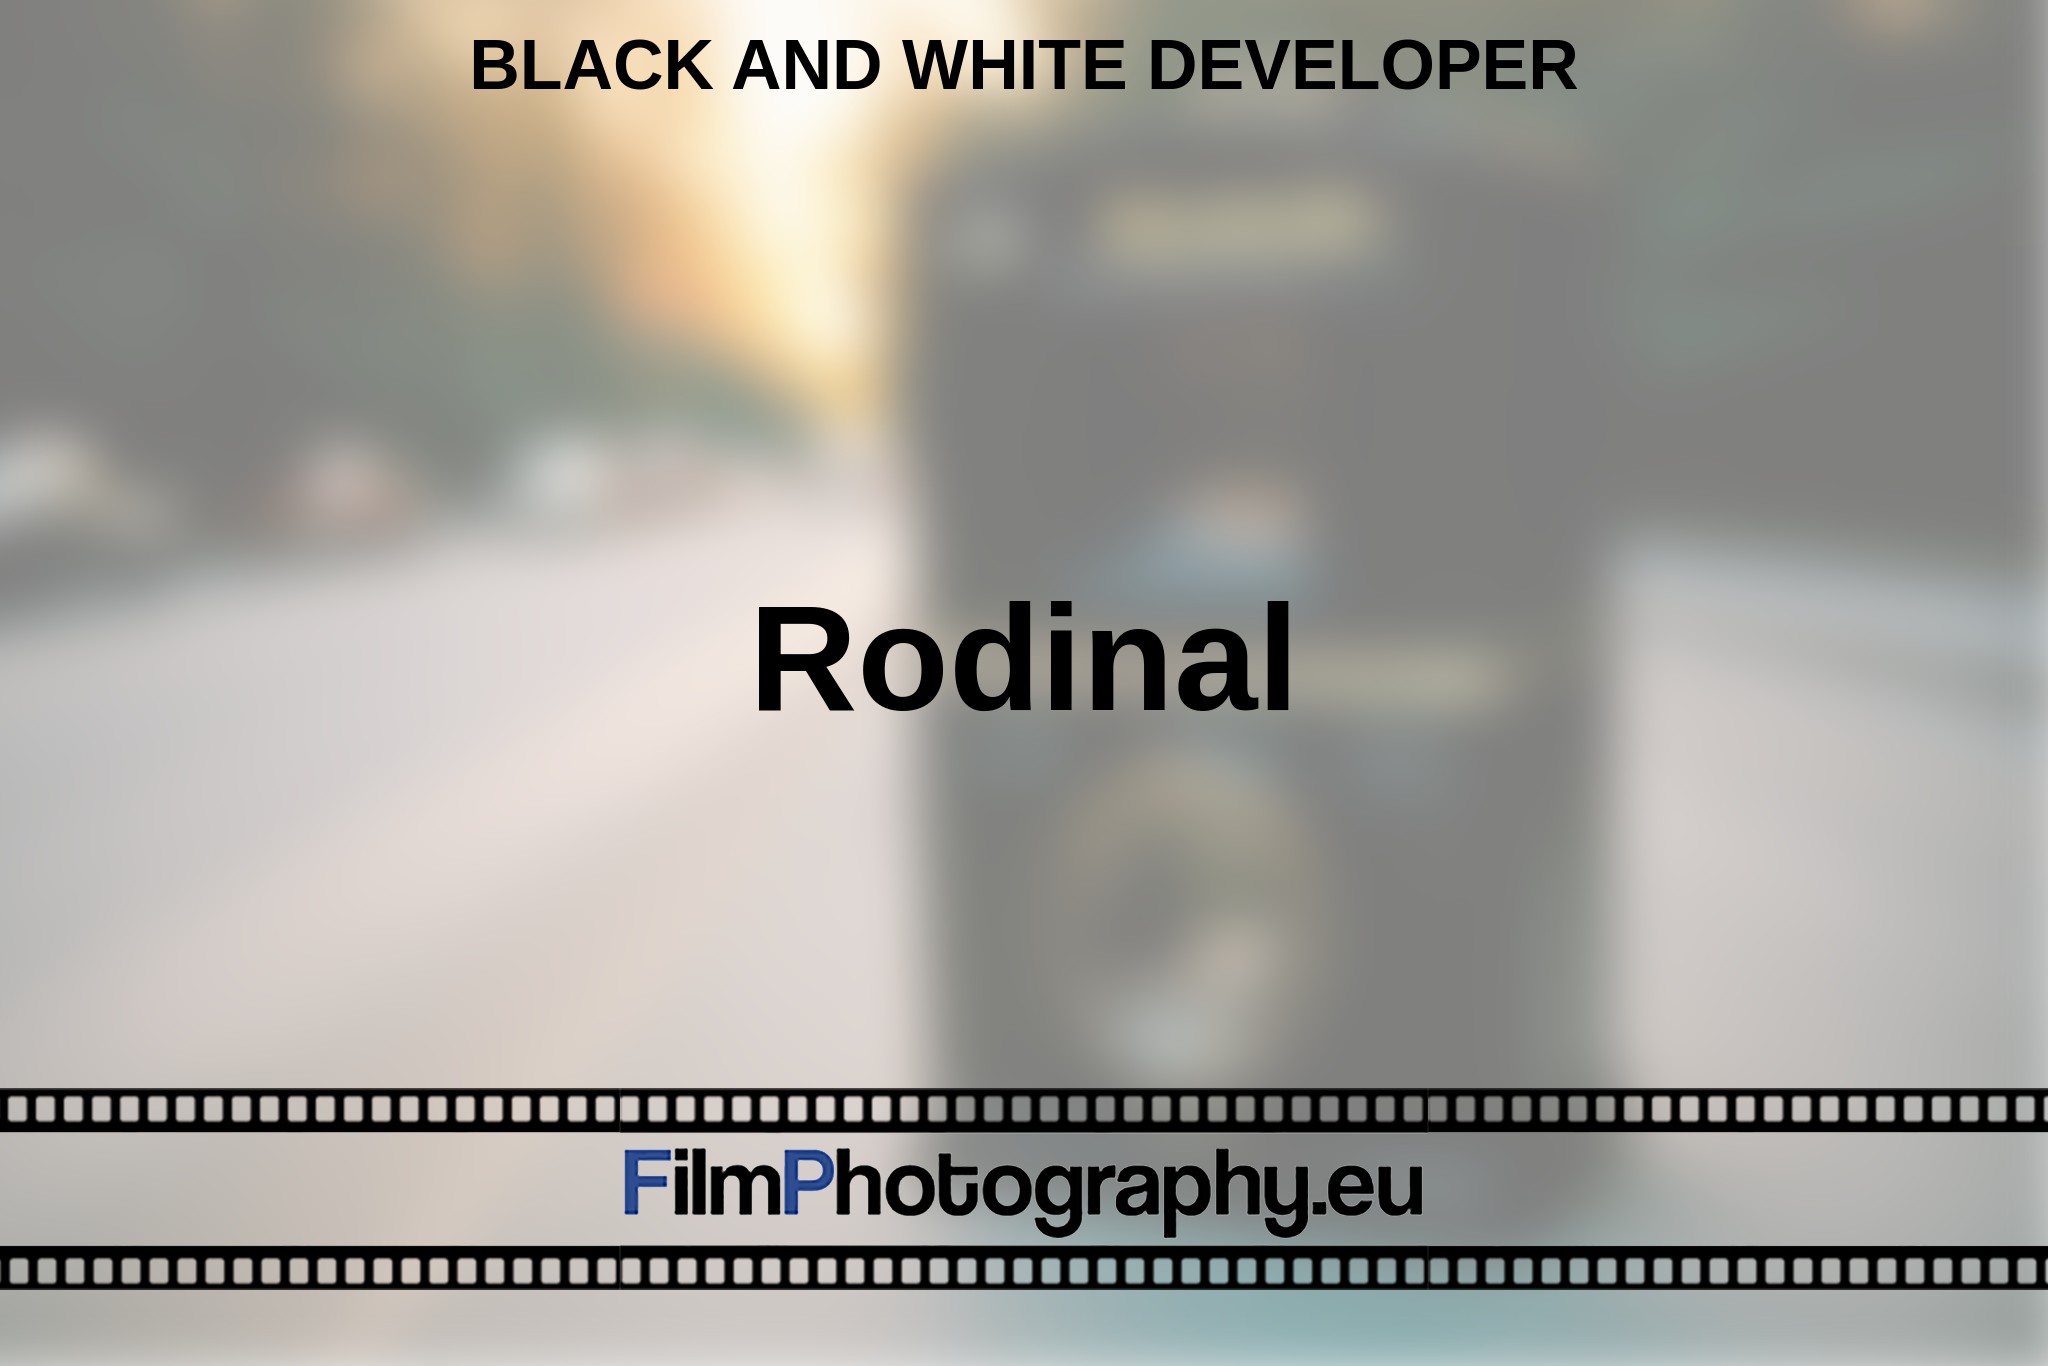 rodinal-black-and-white-developer-en-bnv.jpg